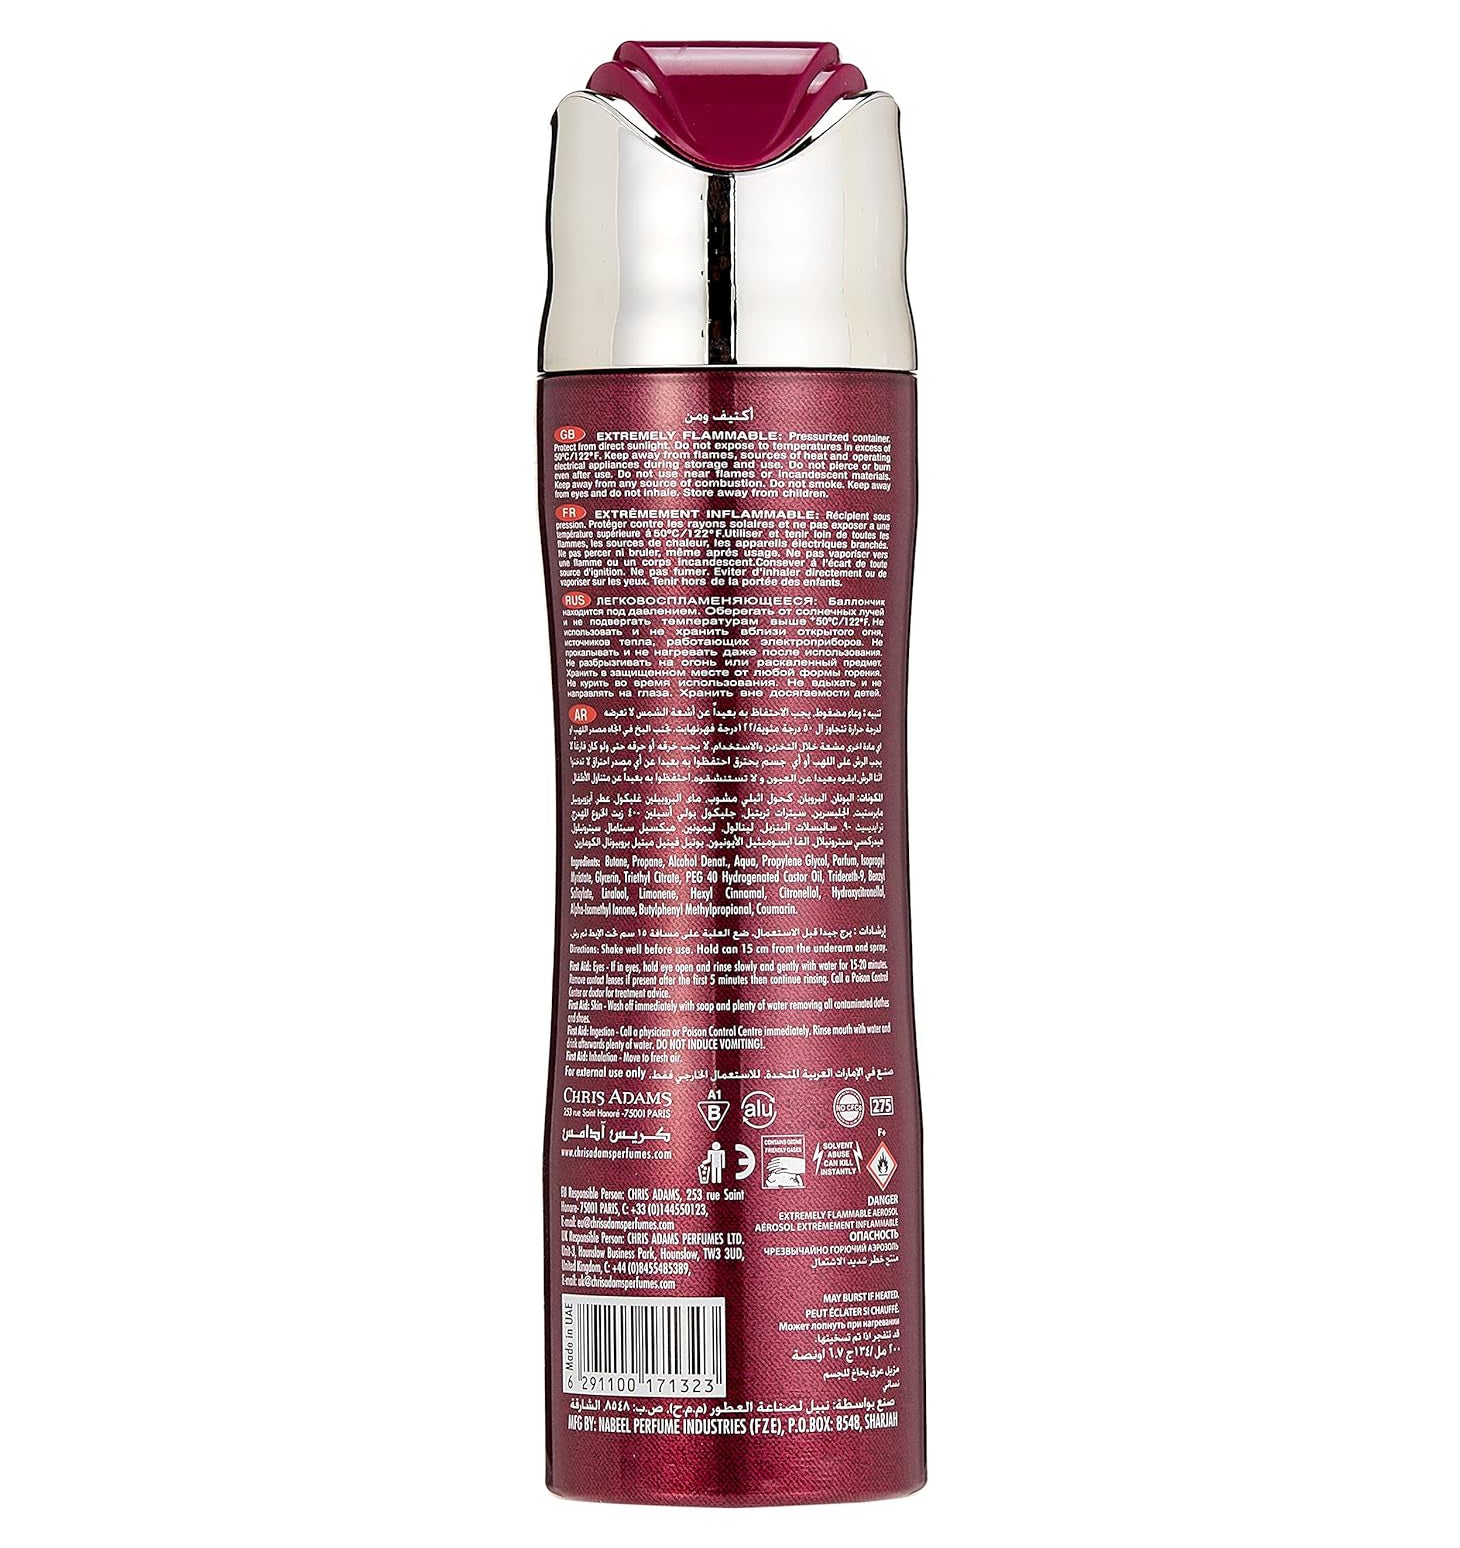 Chris Adams Deodorant Body Spray Active Woman (200ml)